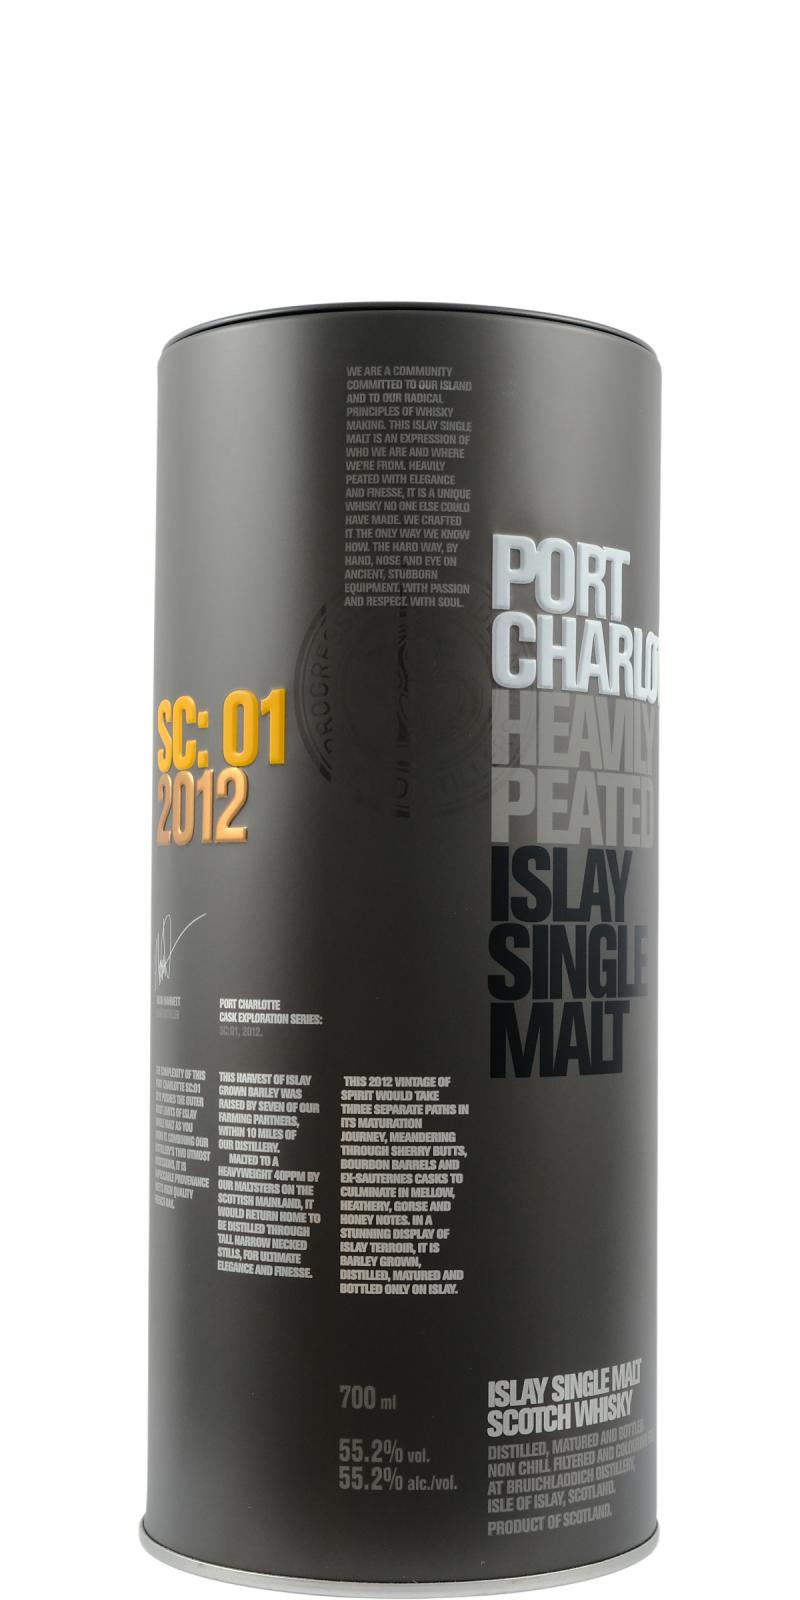 Port Charlotte 2012 SC: 01